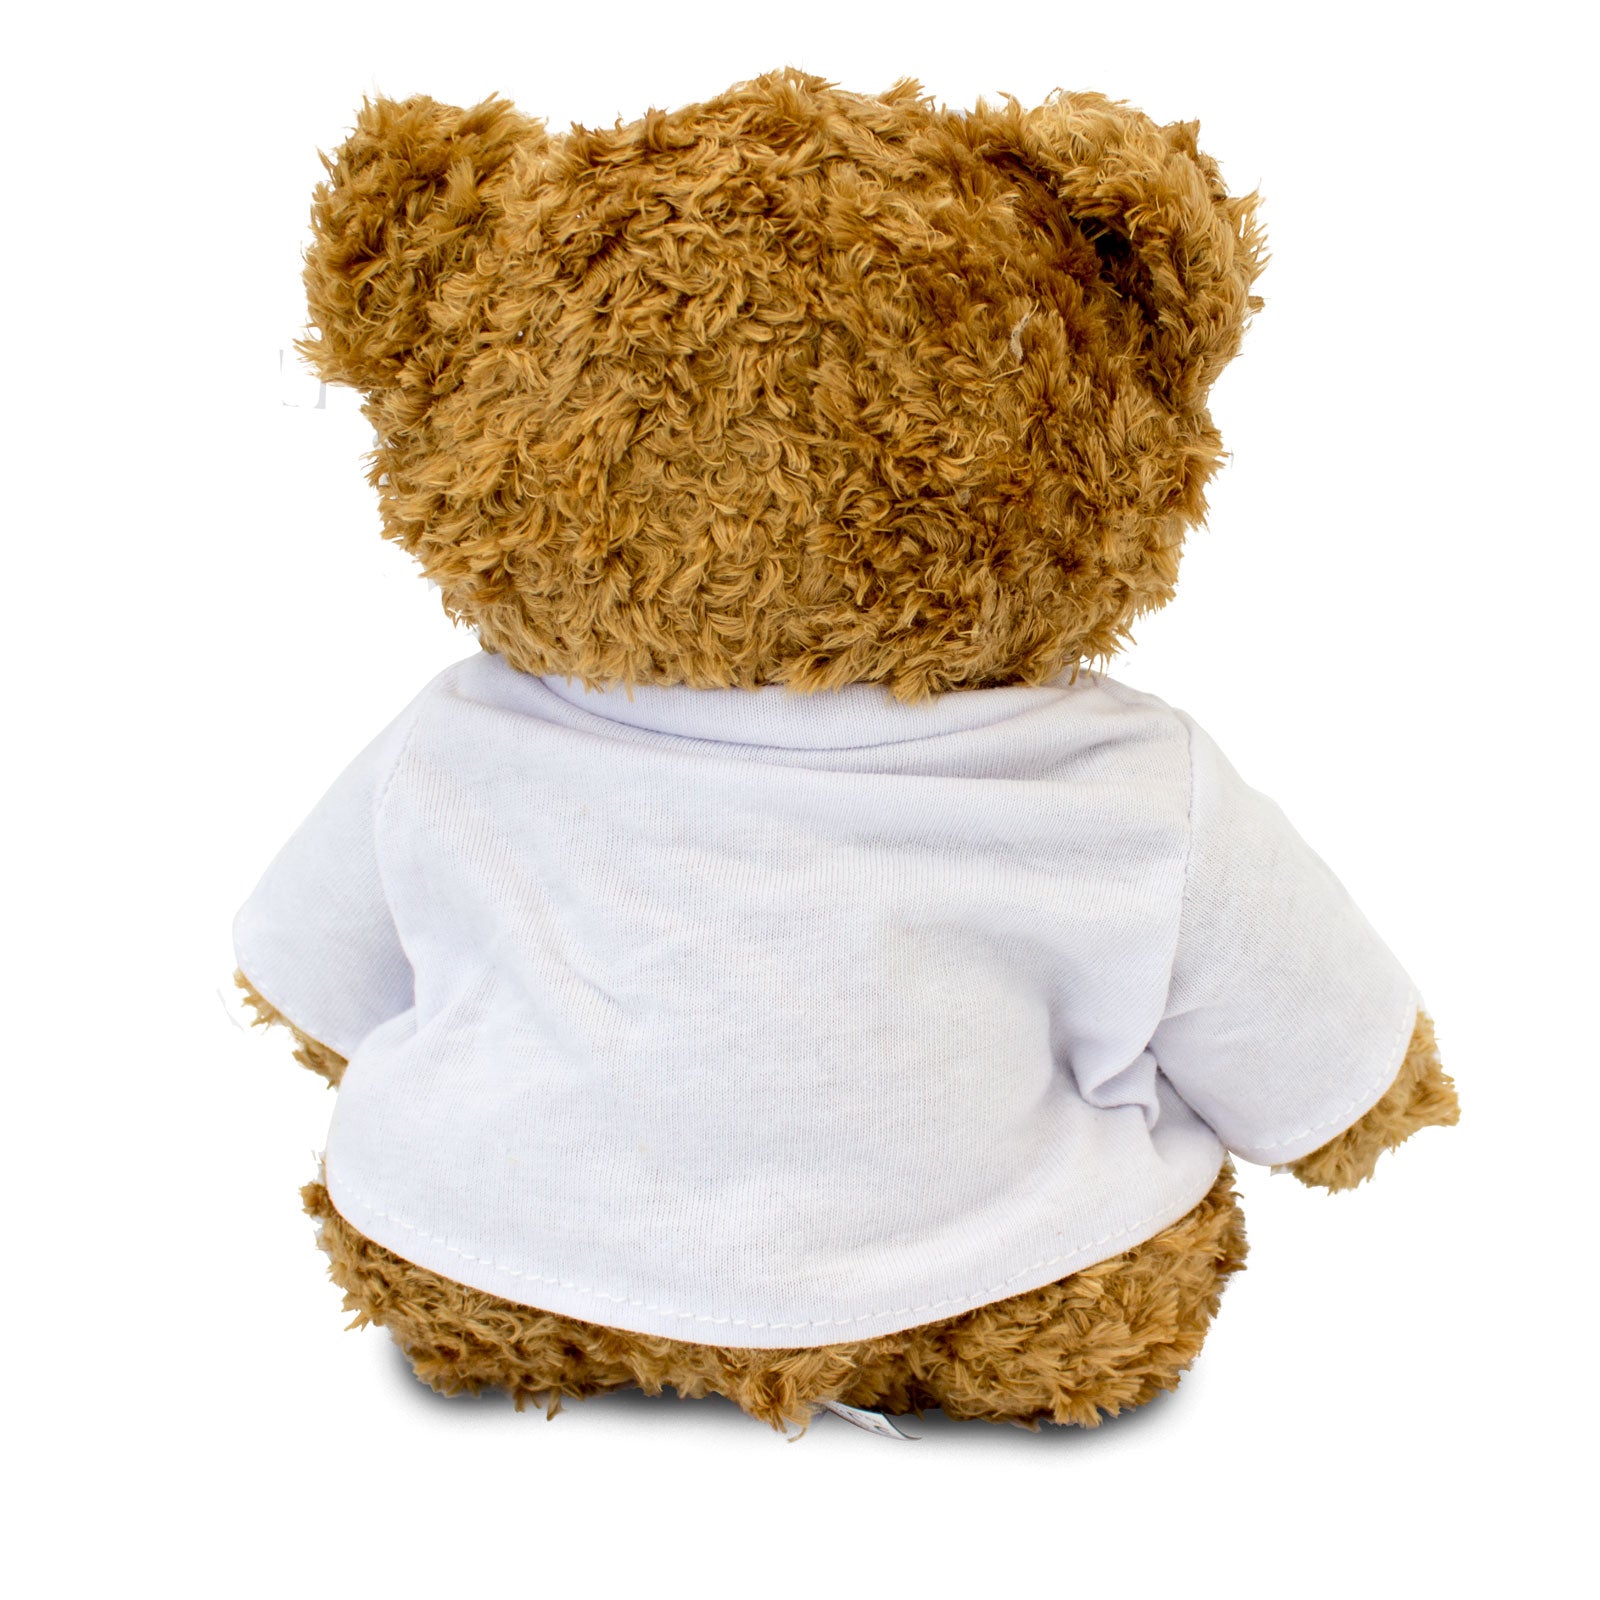 The Greatest Window Cleaner Ever - Teddy Bear